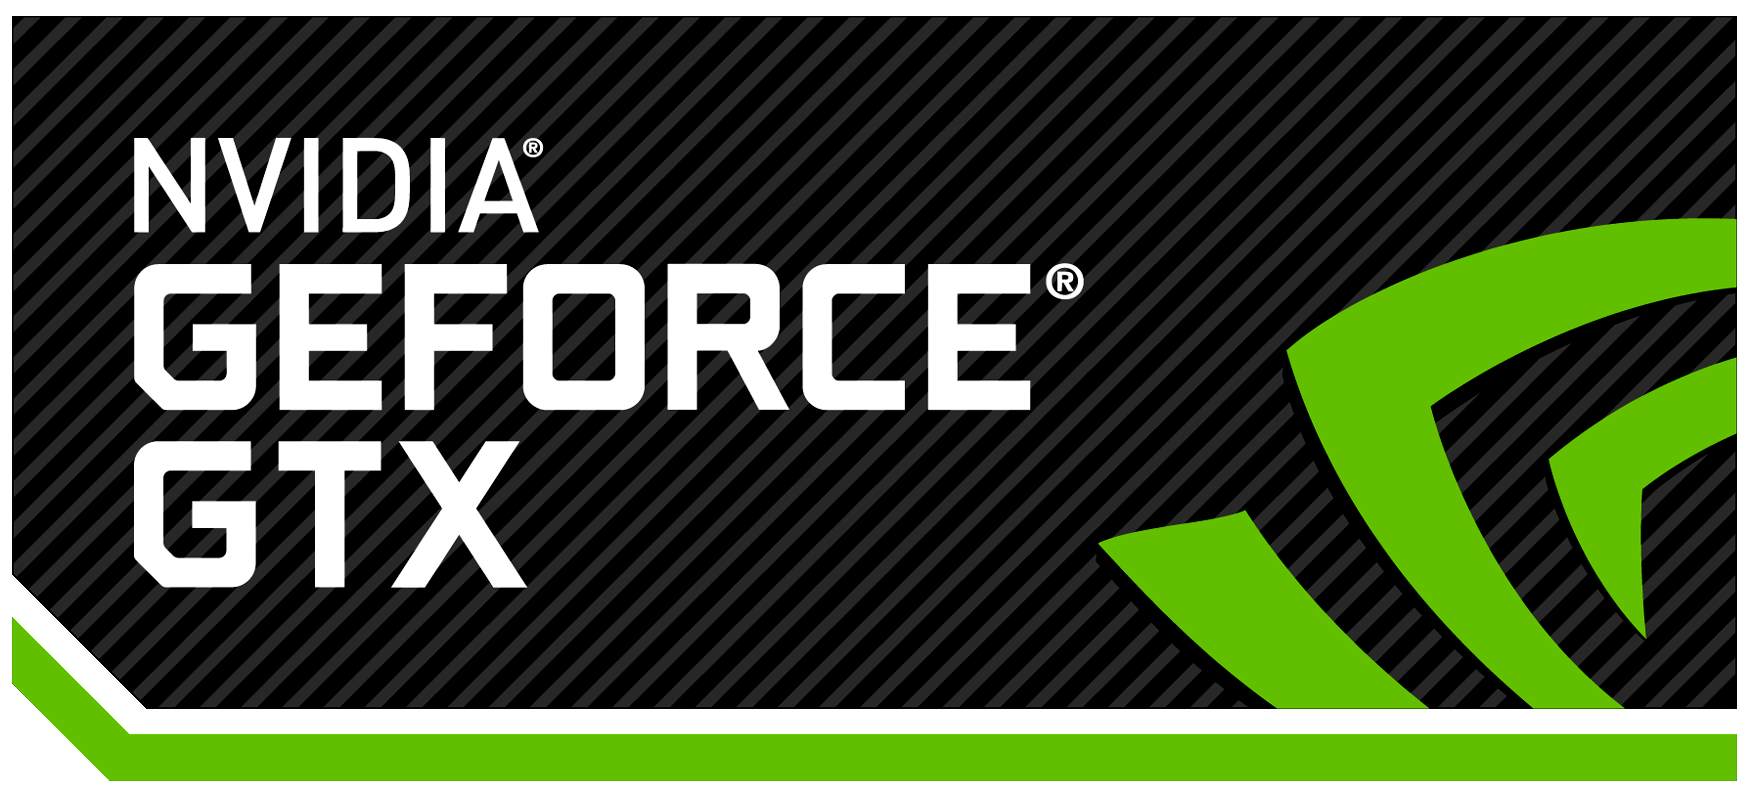 nvidia geforce gtx logo